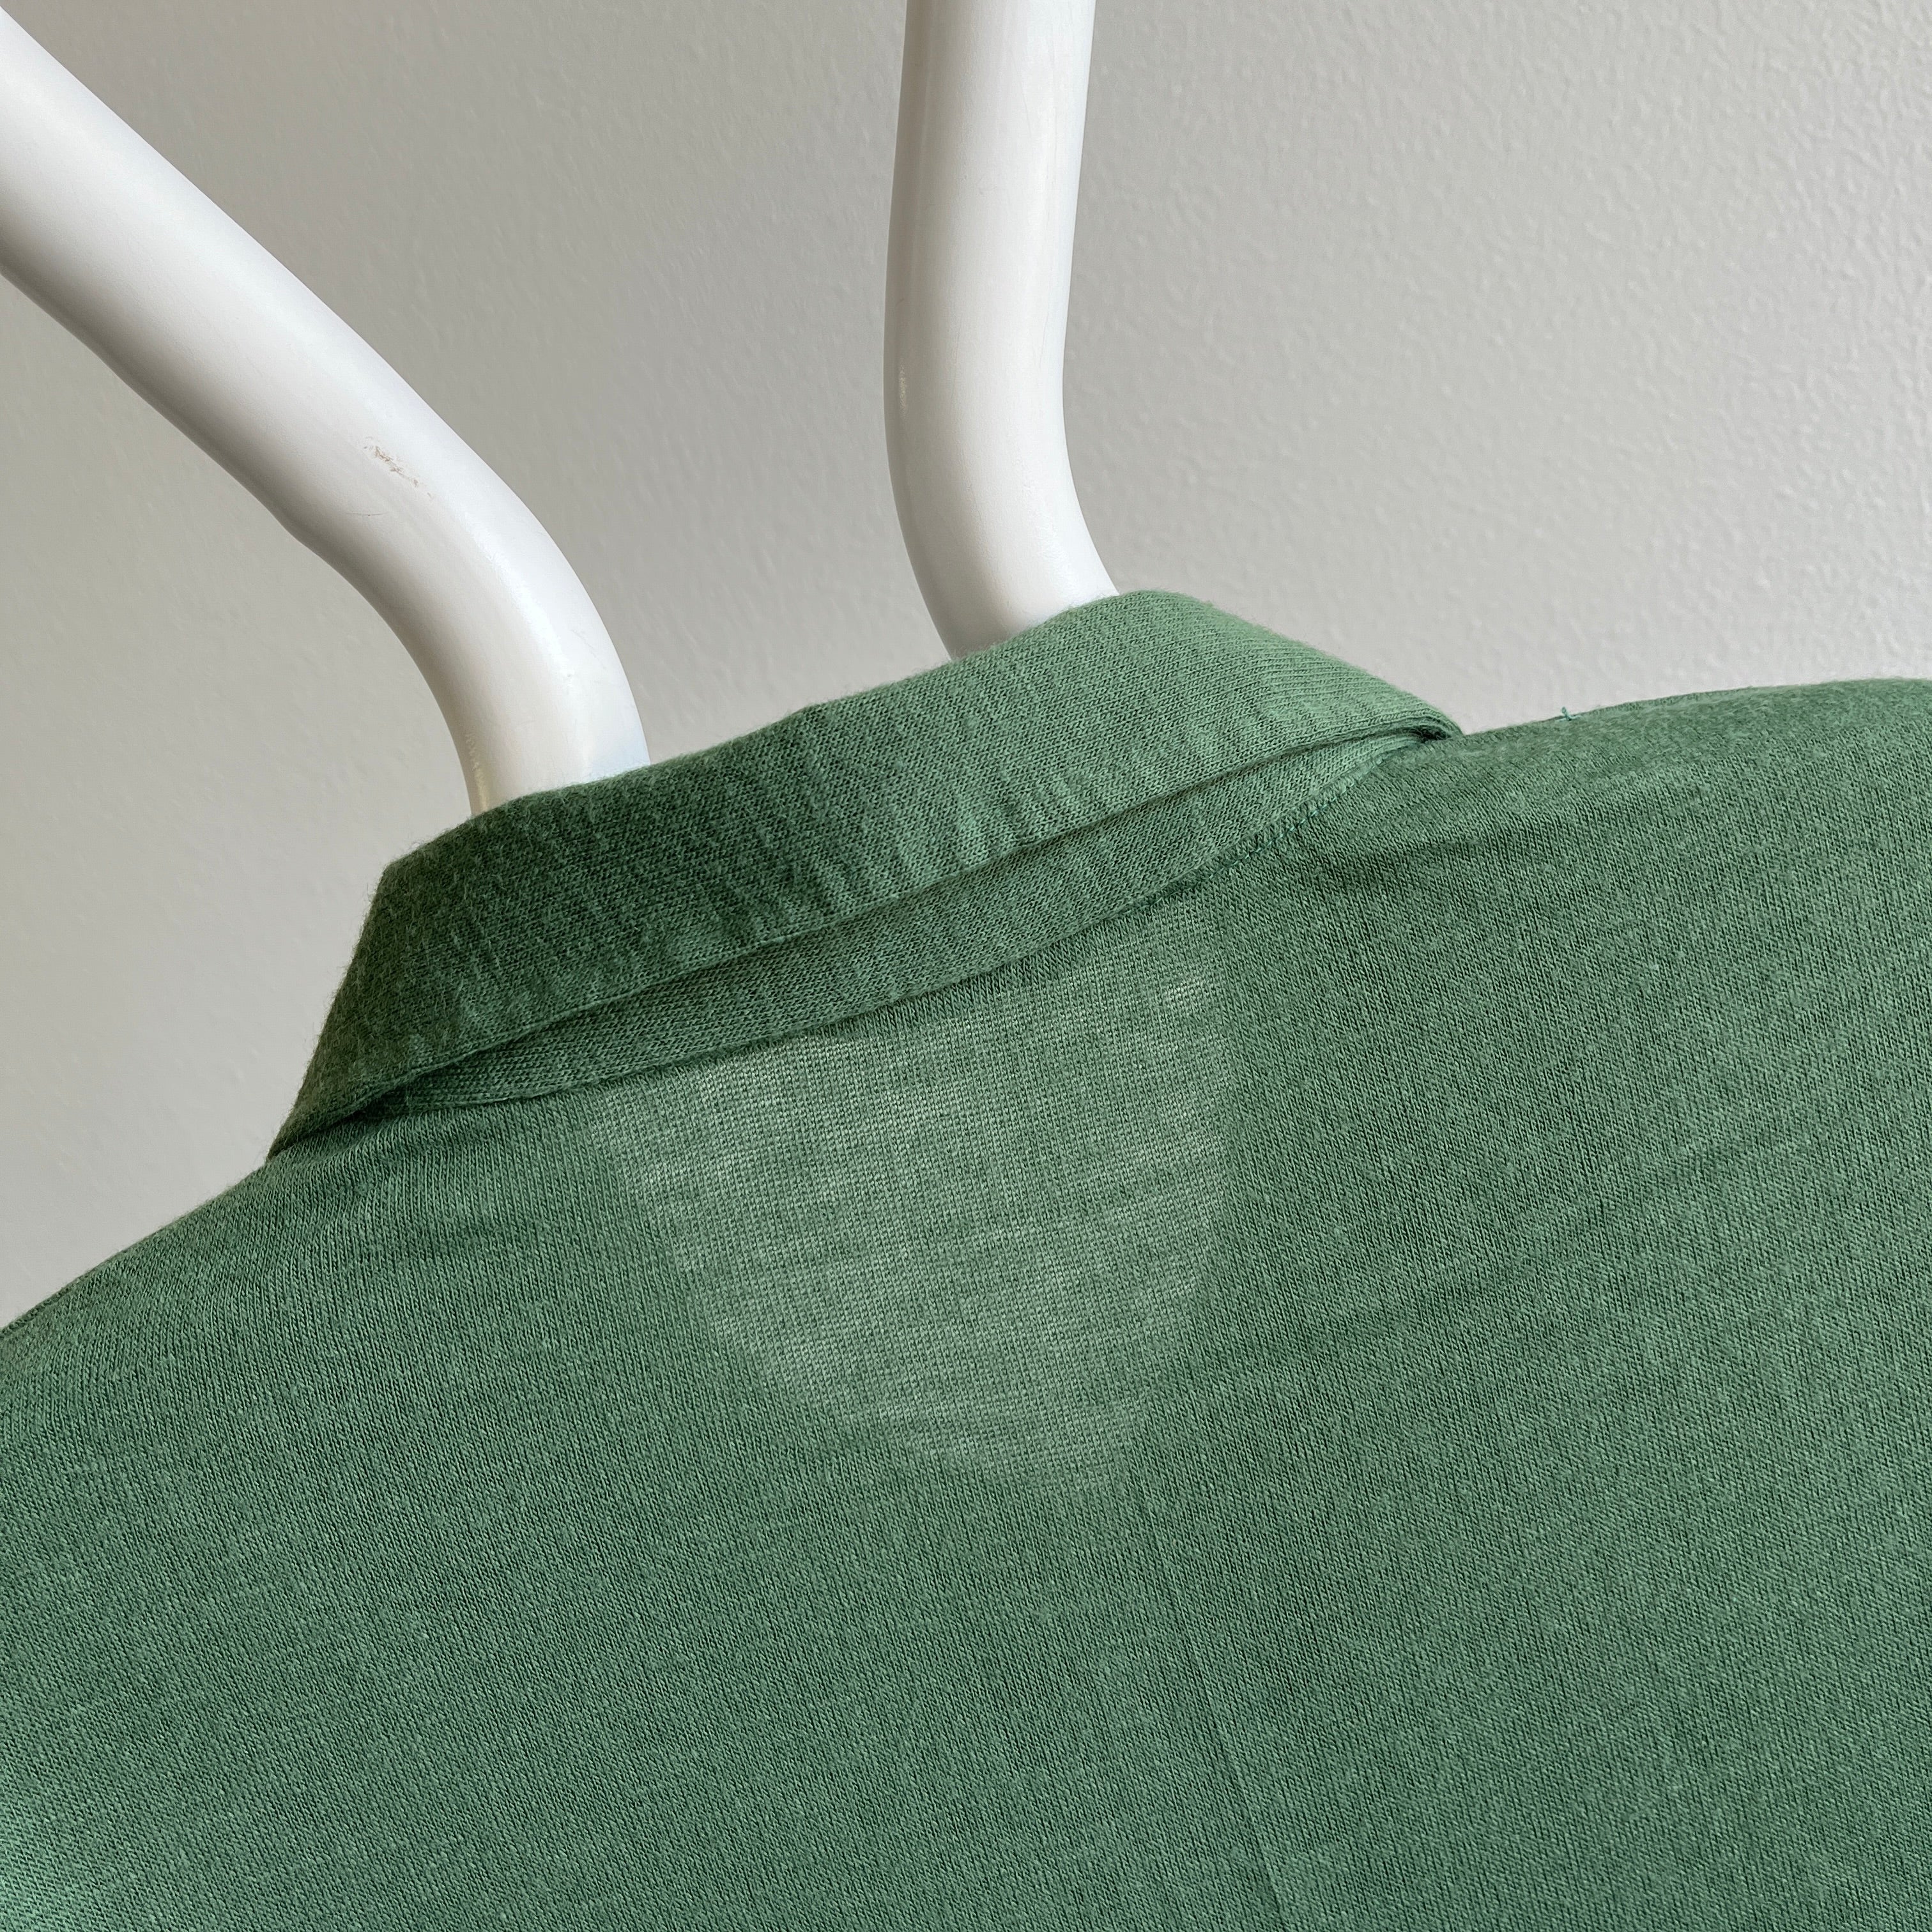 1970s Jade Green Soft Acrlyic Long Sleeve Polo Shirt